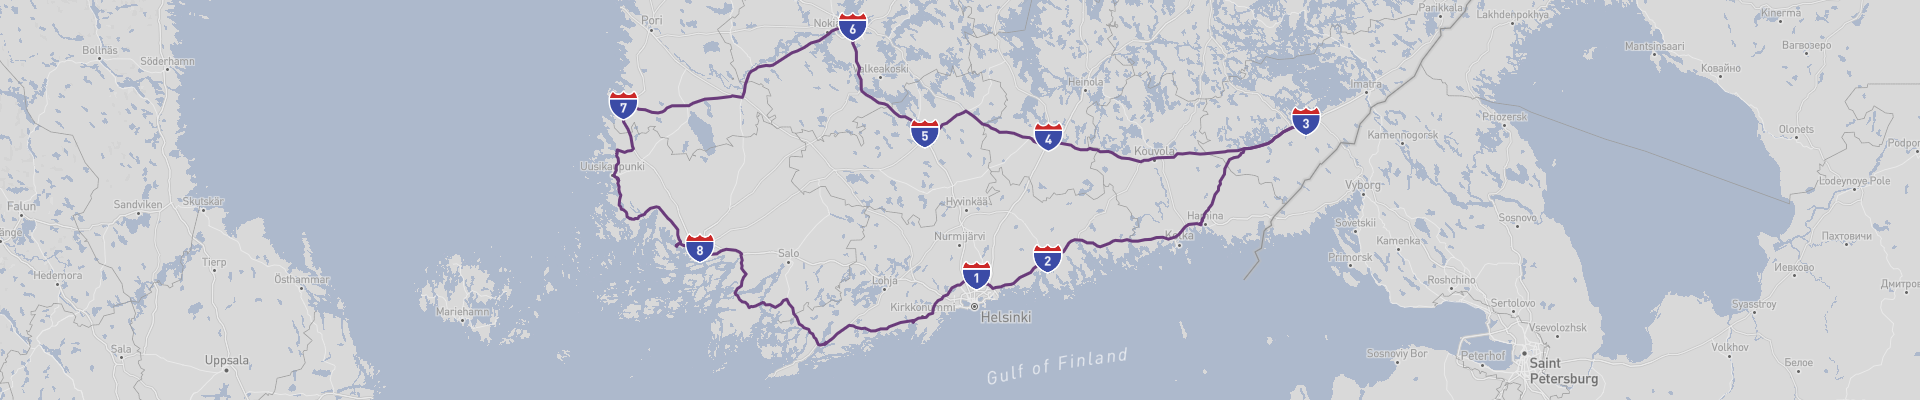 Zuid-Finland Road Trip